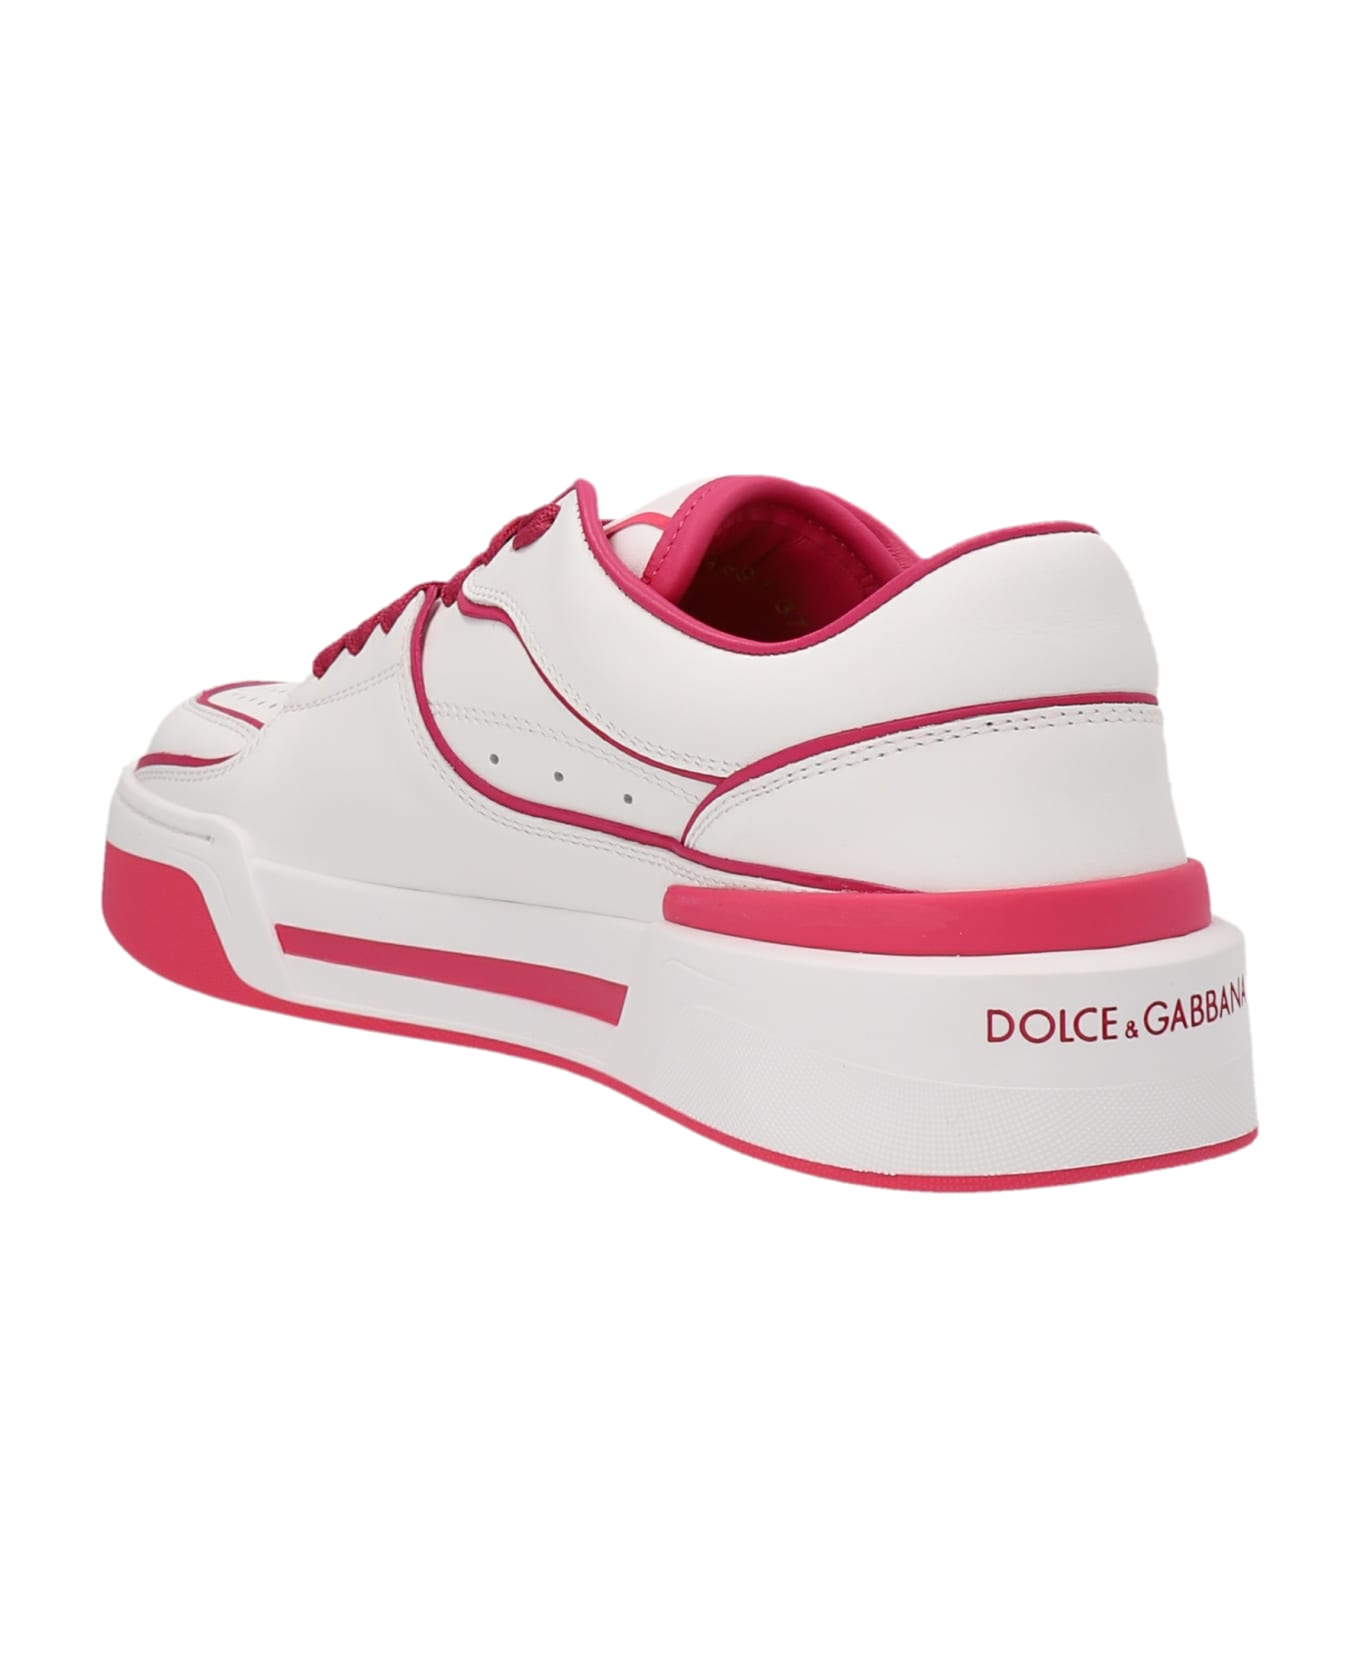 Dolce & Gabbana Two-color Sneakers - Fuchsia